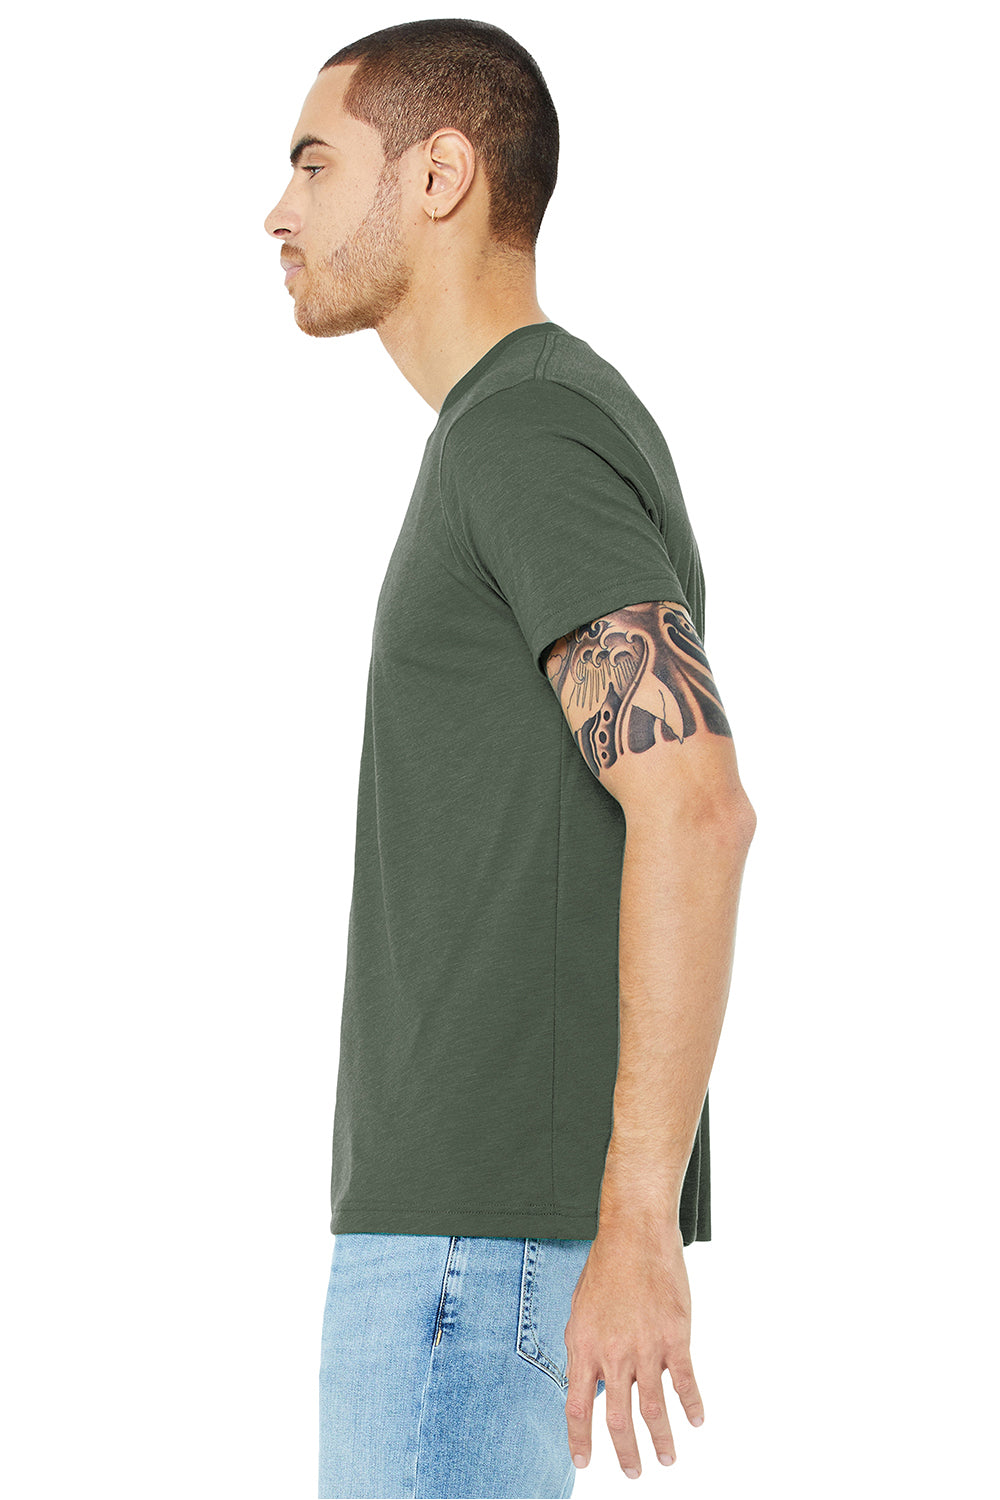 Bella + Canvas BC3413/3413C/3413 Mens Short Sleeve Crewneck T-Shirt Military Green Model Side